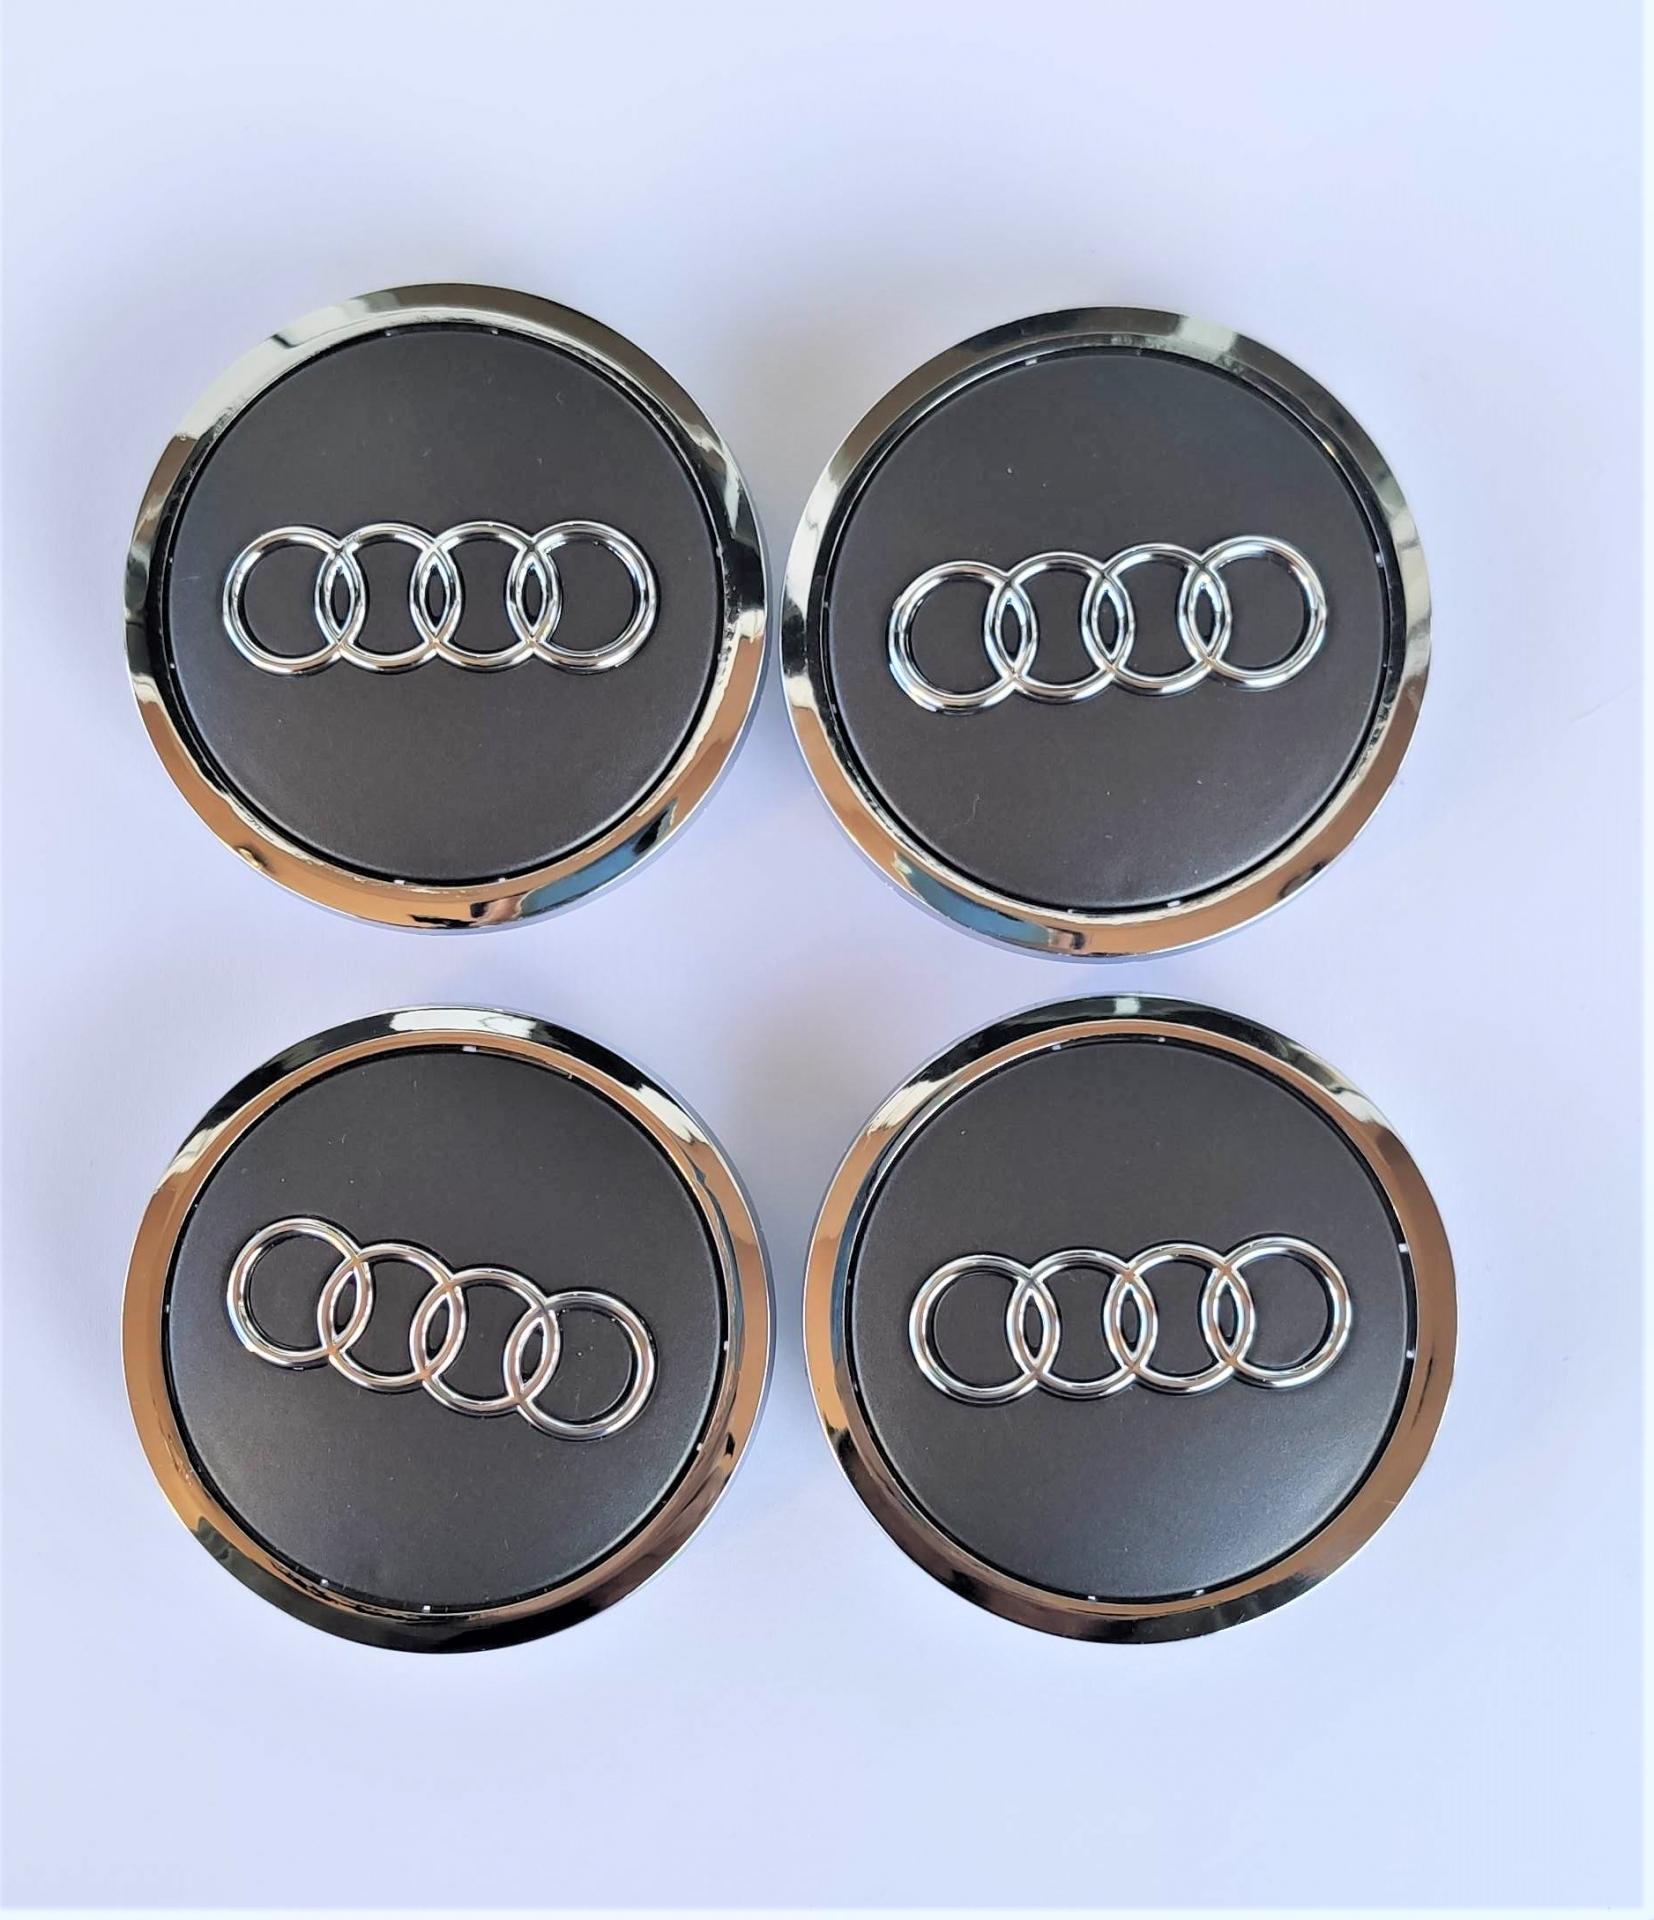 69 x 58 mm. Tapa Buje Rueda Valida para "Audi"   Color  Gris   Diametro:  Exterior 69mm. Interior 58mm.